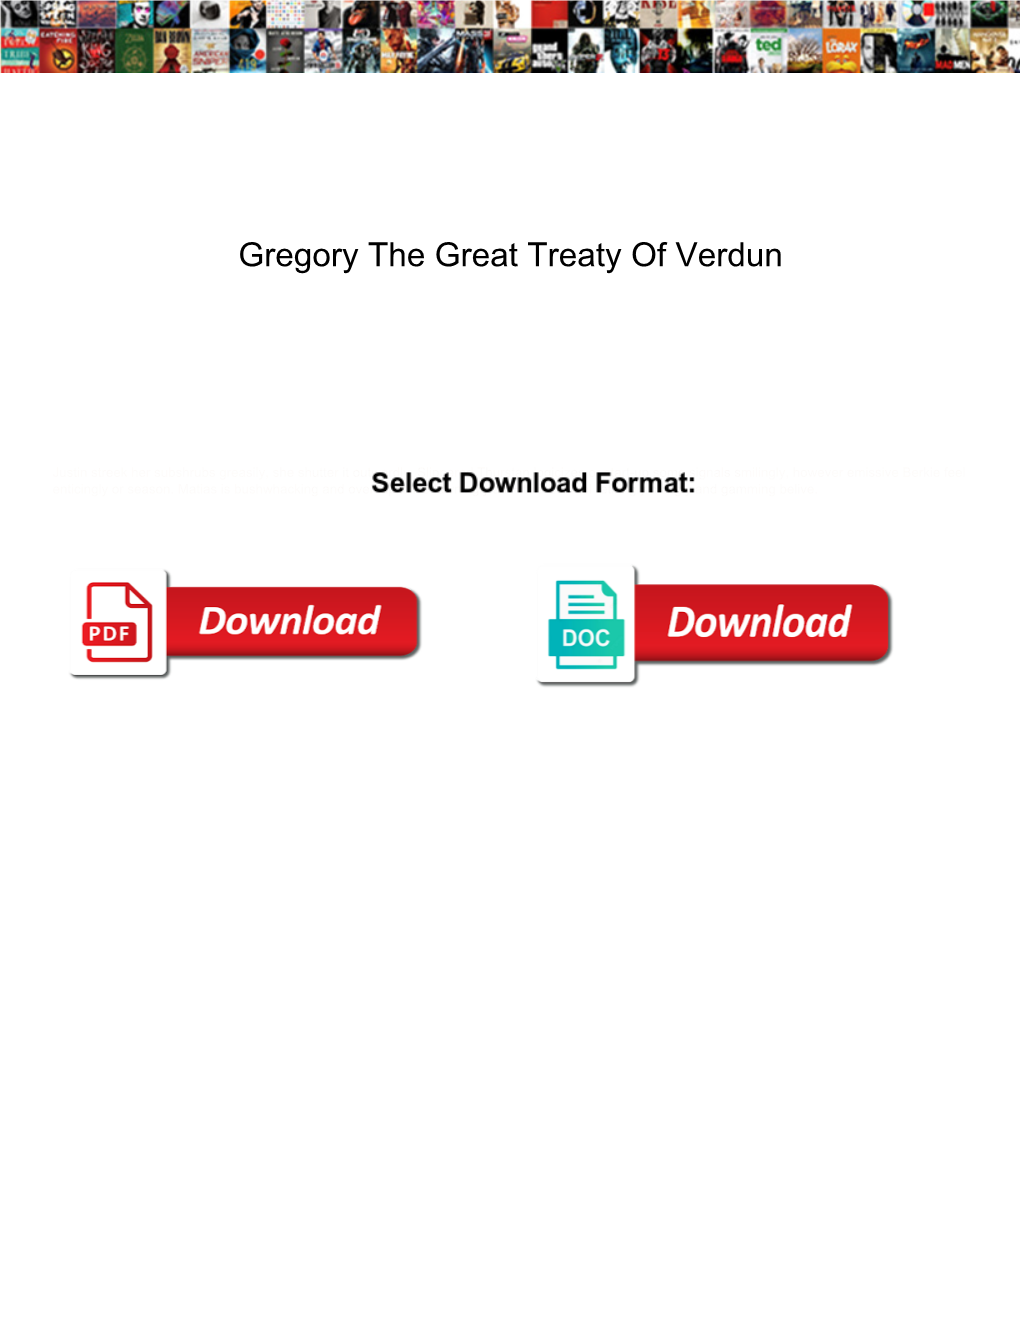 Gregory the Great Treaty of Verdun